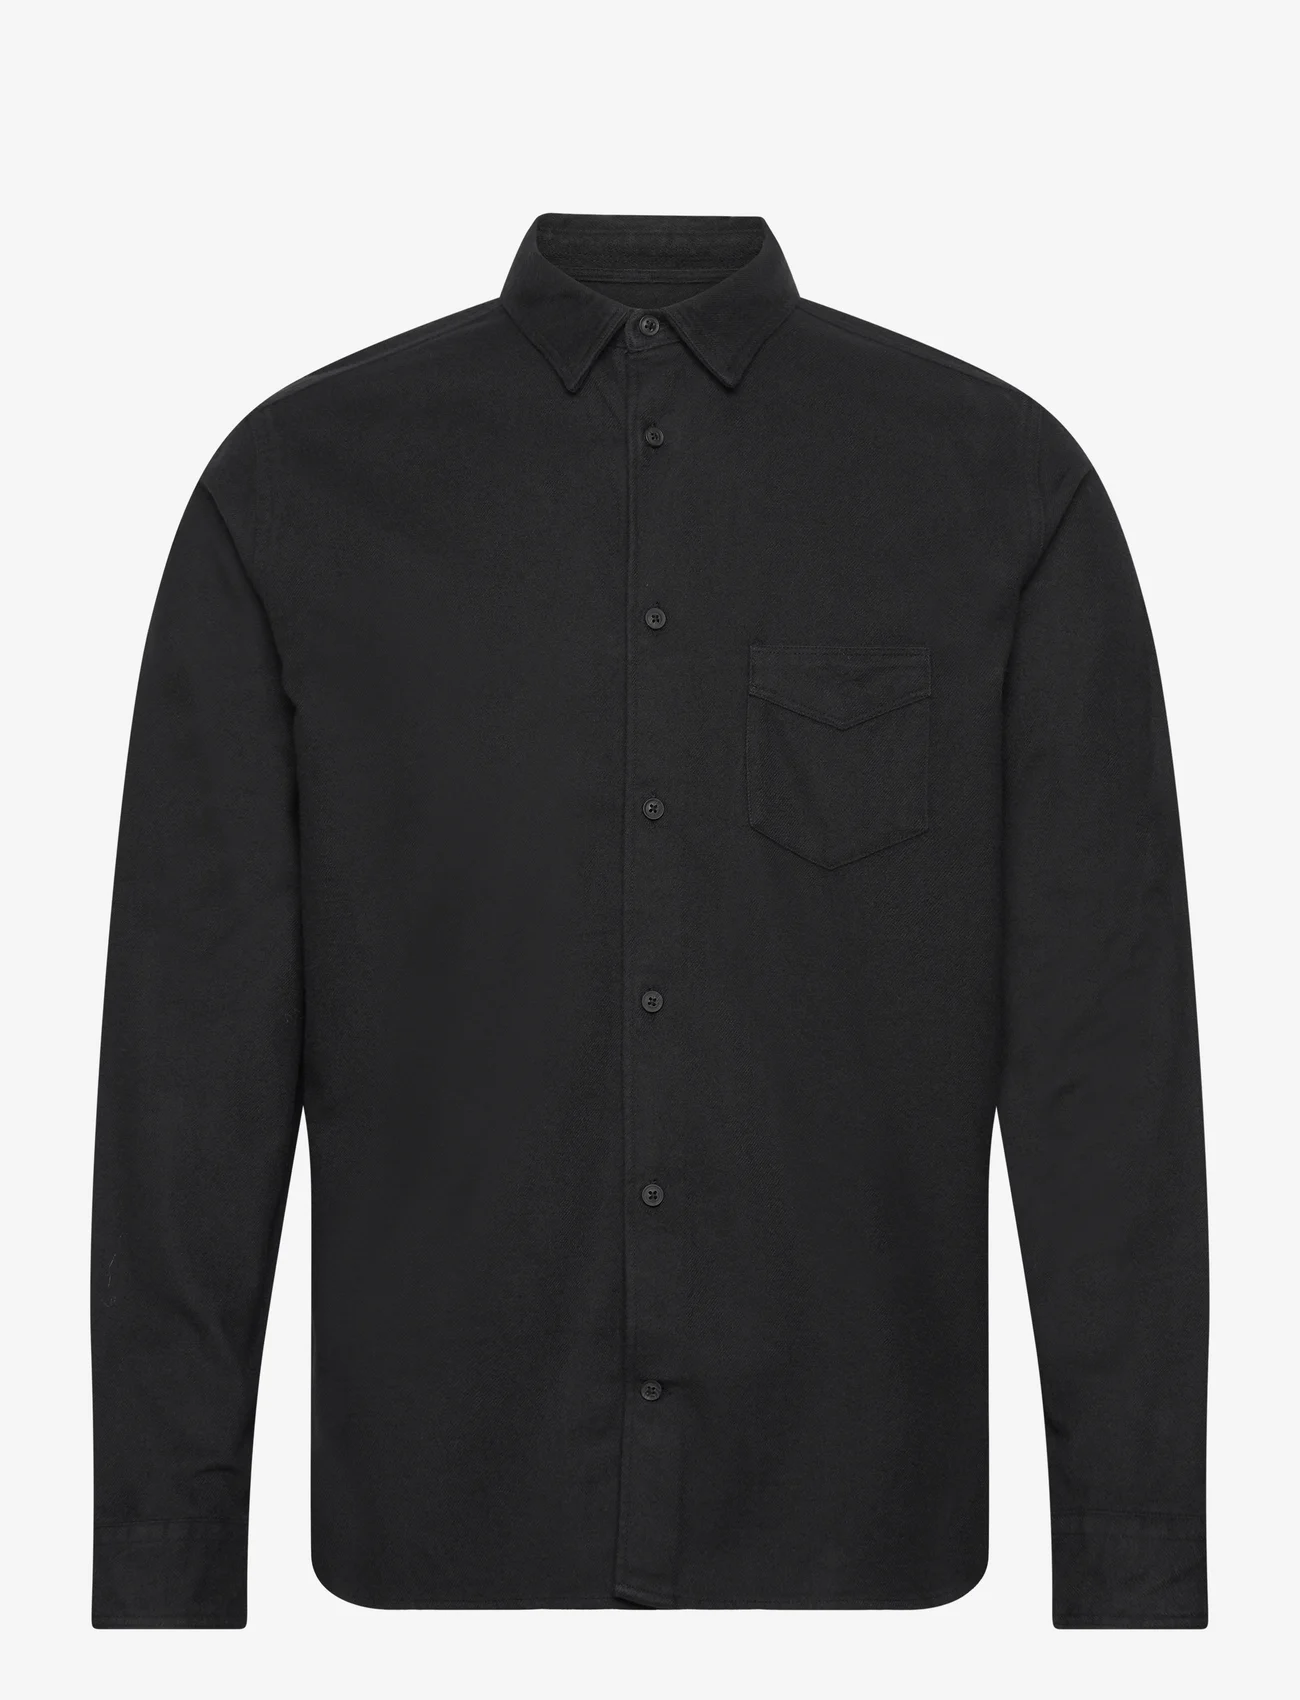 AllSaints - ARDEN LS SHIRT - casual skjorter - jet black - 0